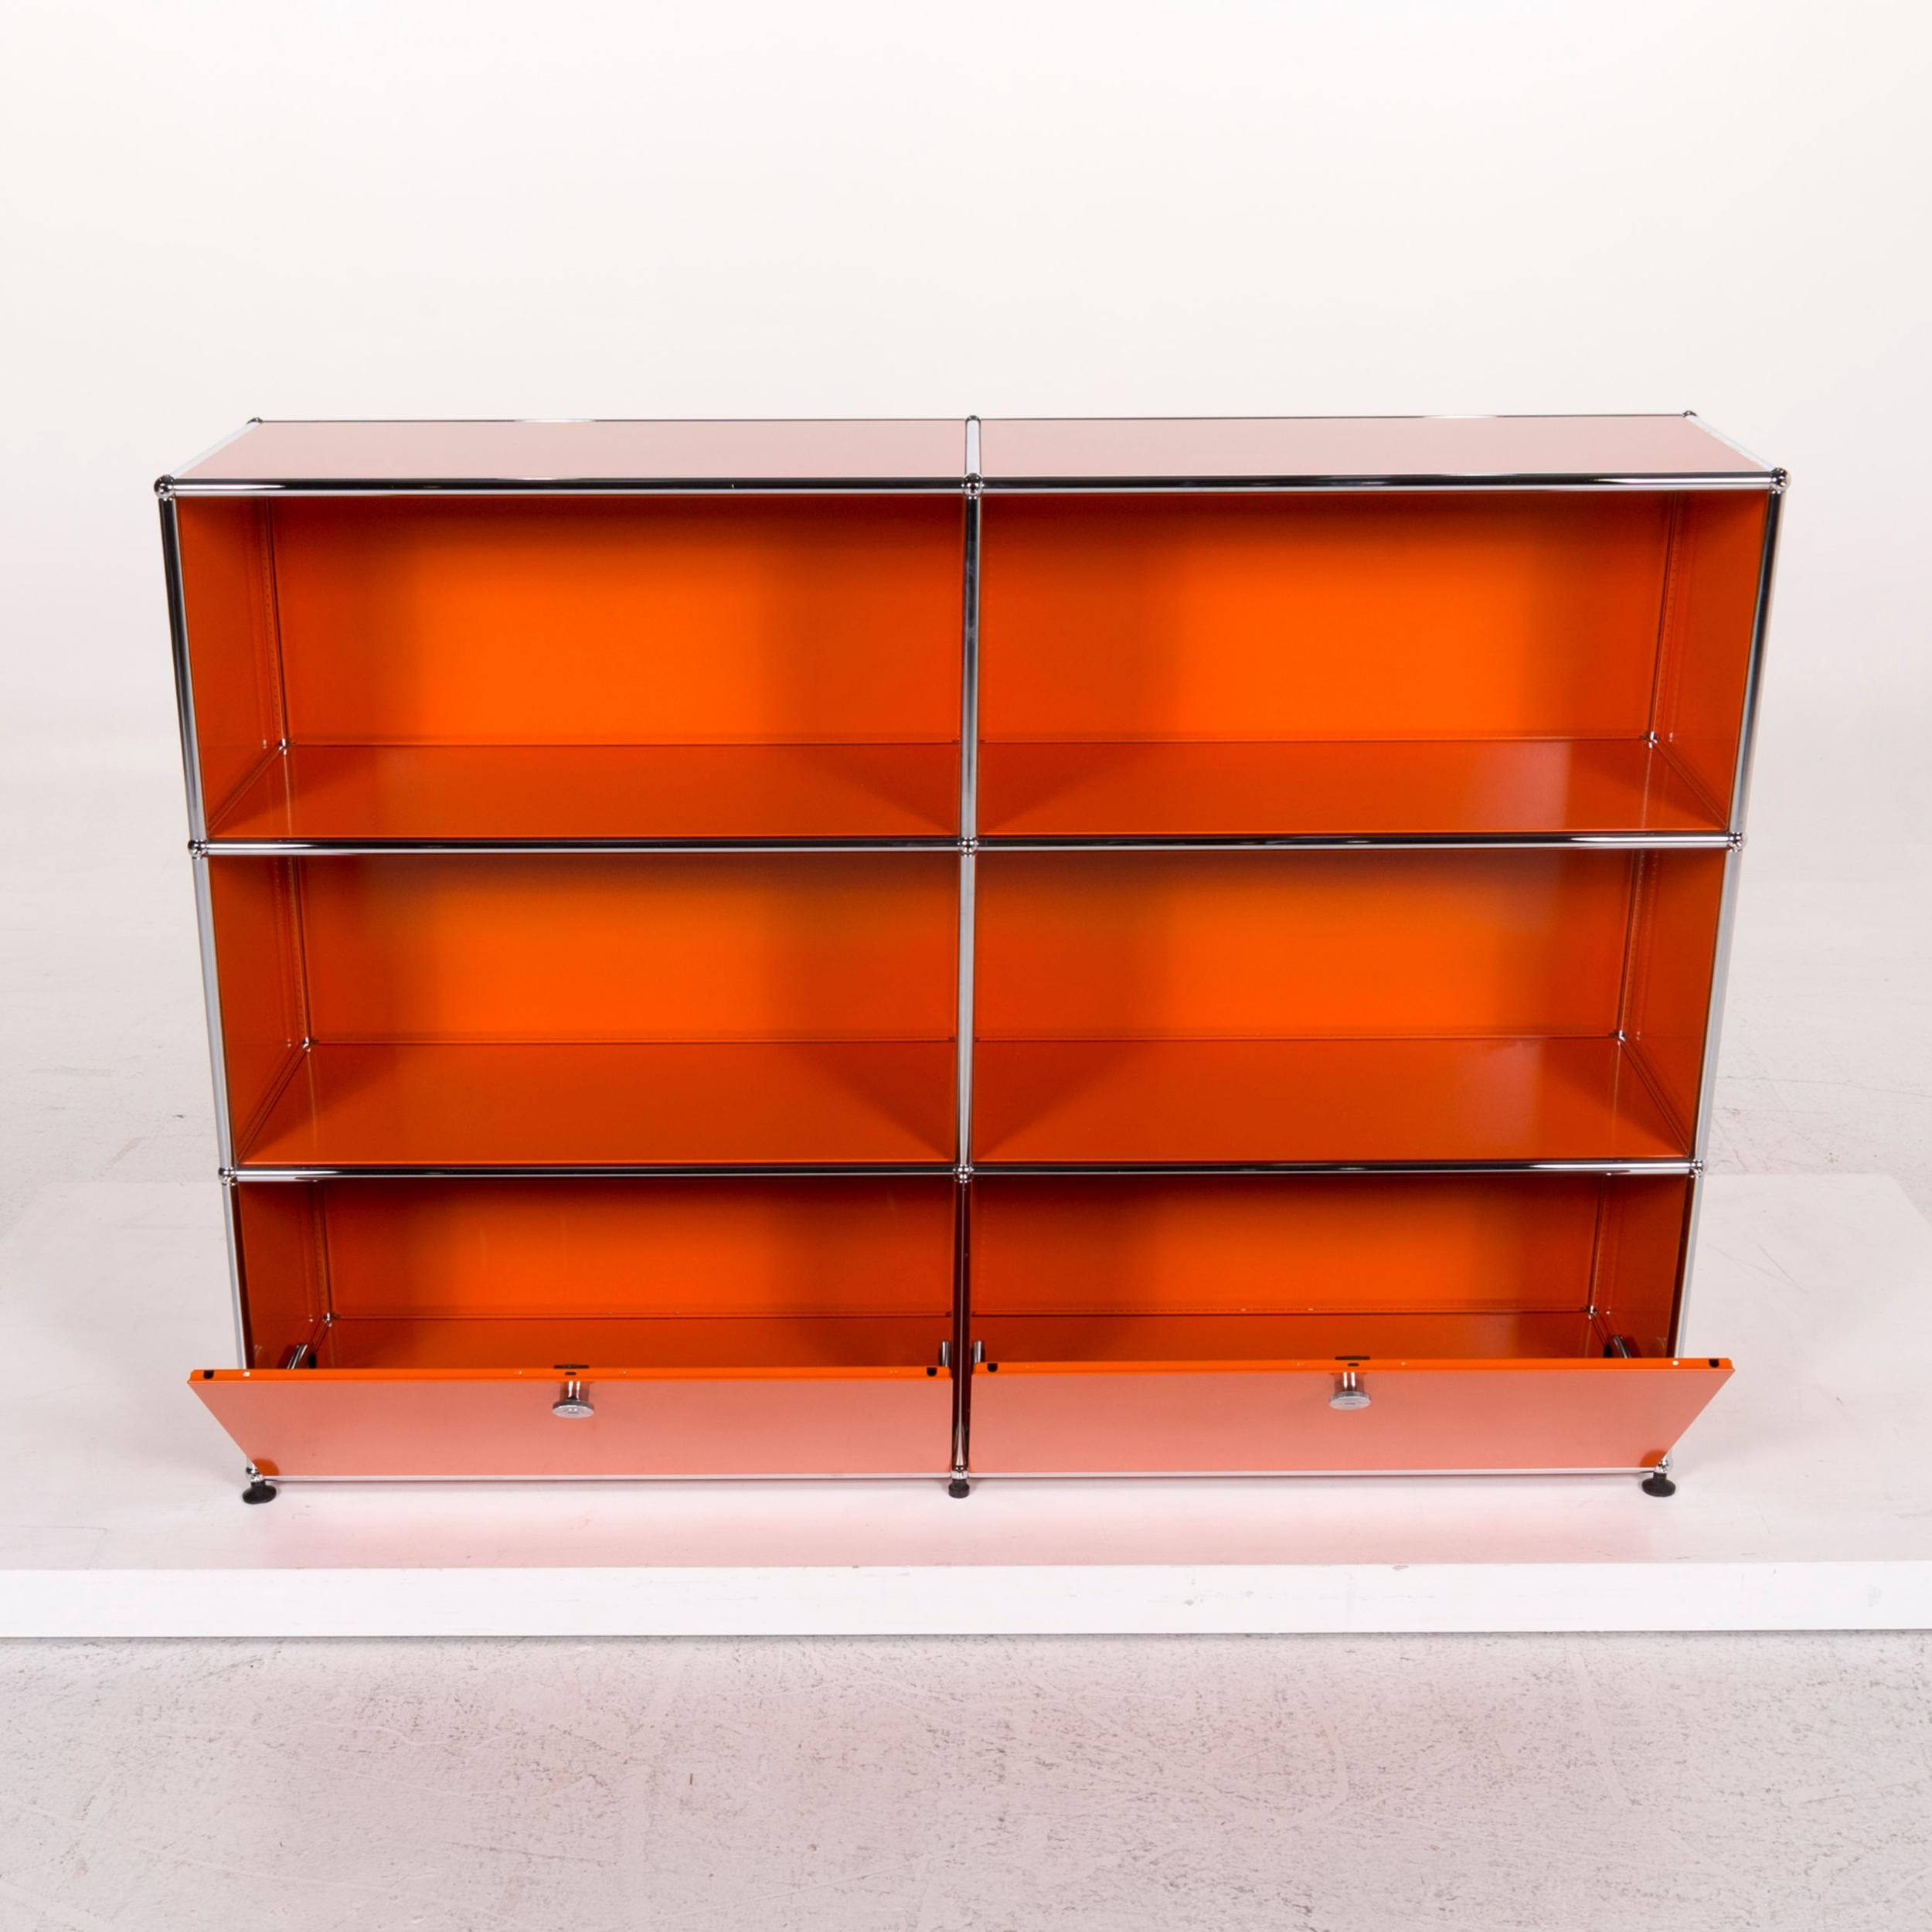 We bring to you an USM Haller metal sideboard orange shelf office.

 

 Product measurements in centimeters:
 

 Depth 38
 Width 153
 Height 109.





 